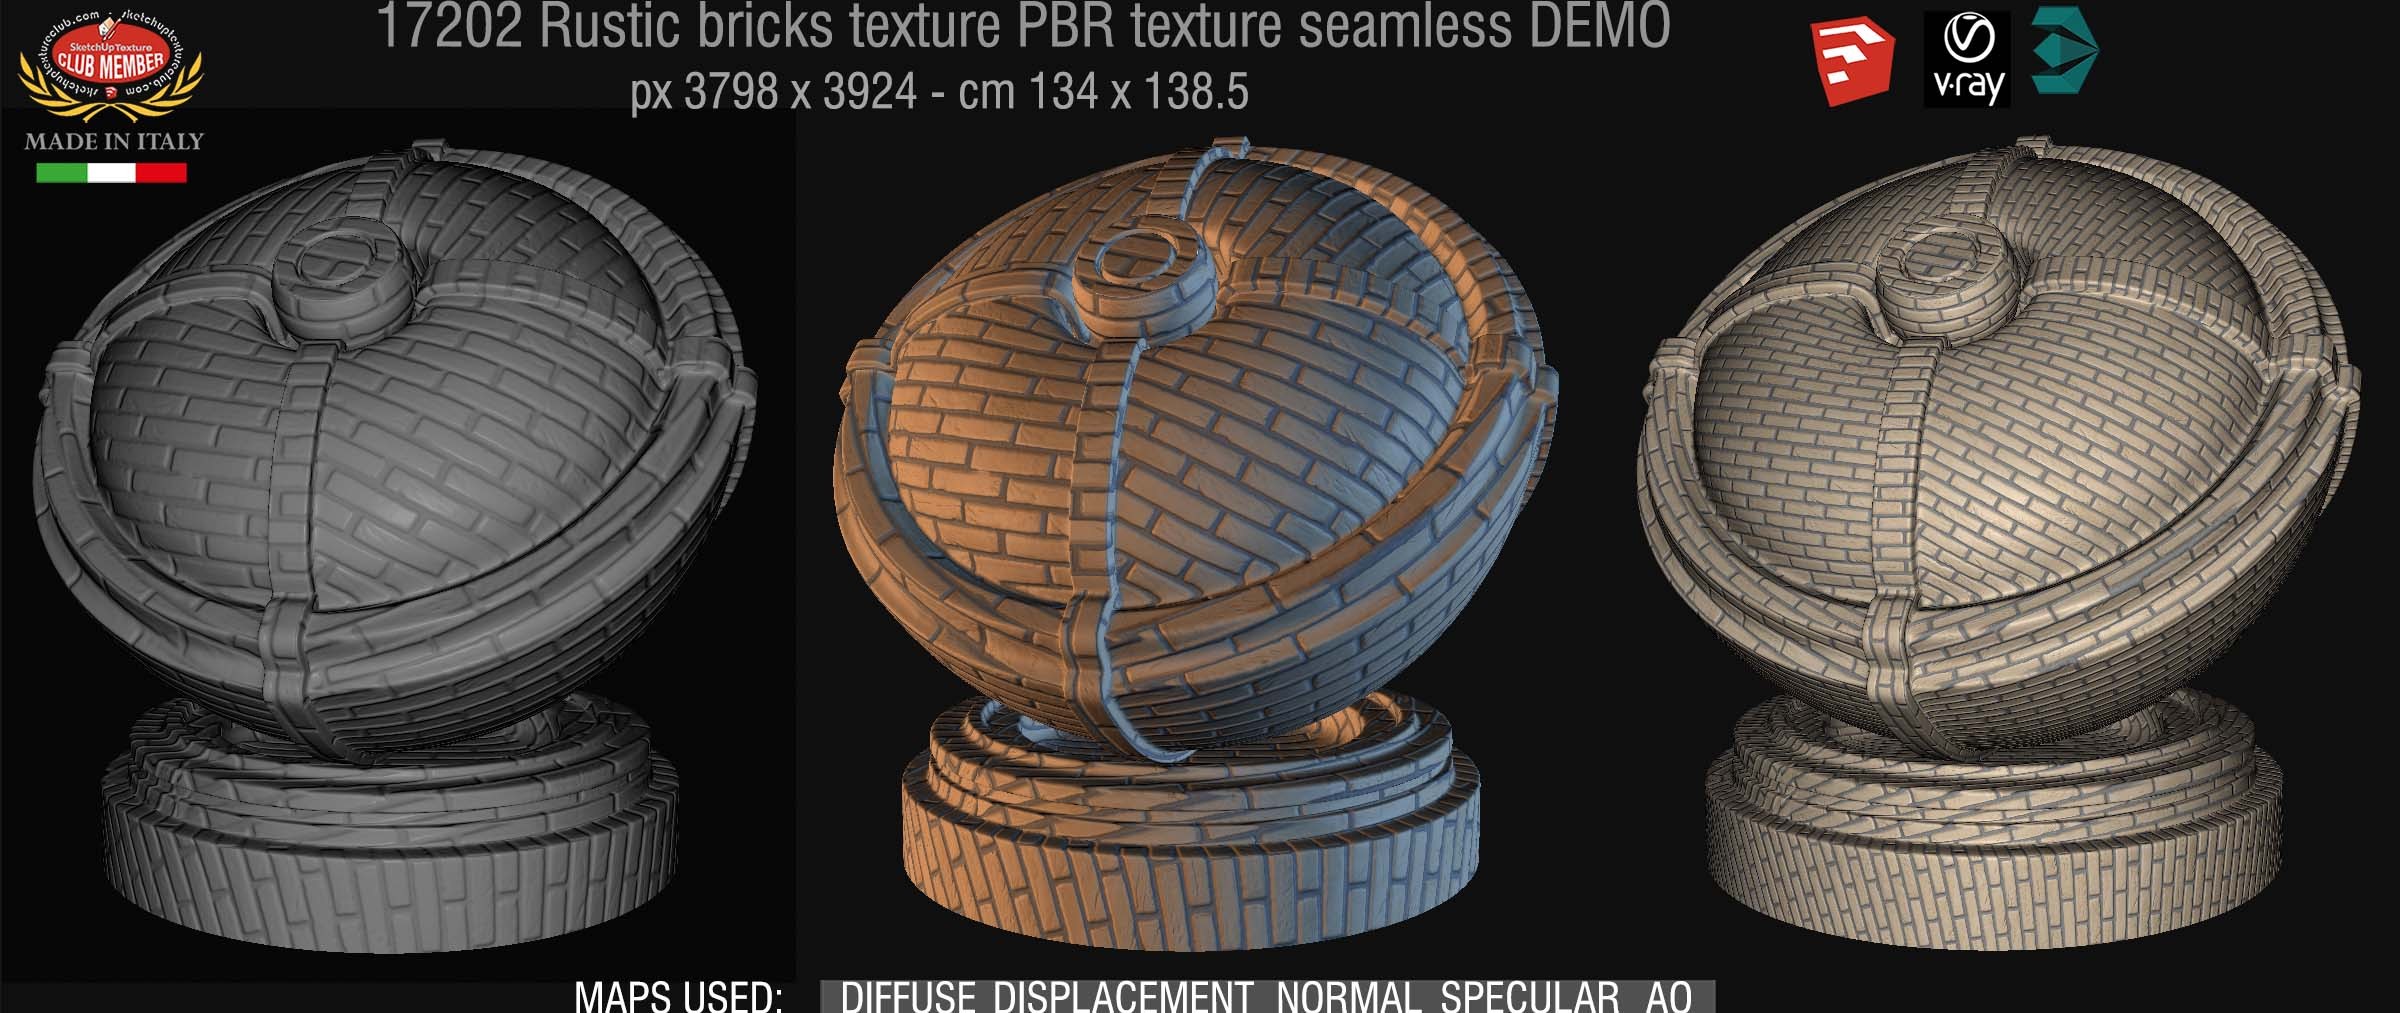 17202 Rustic bricks PBR texture seamless DEMO